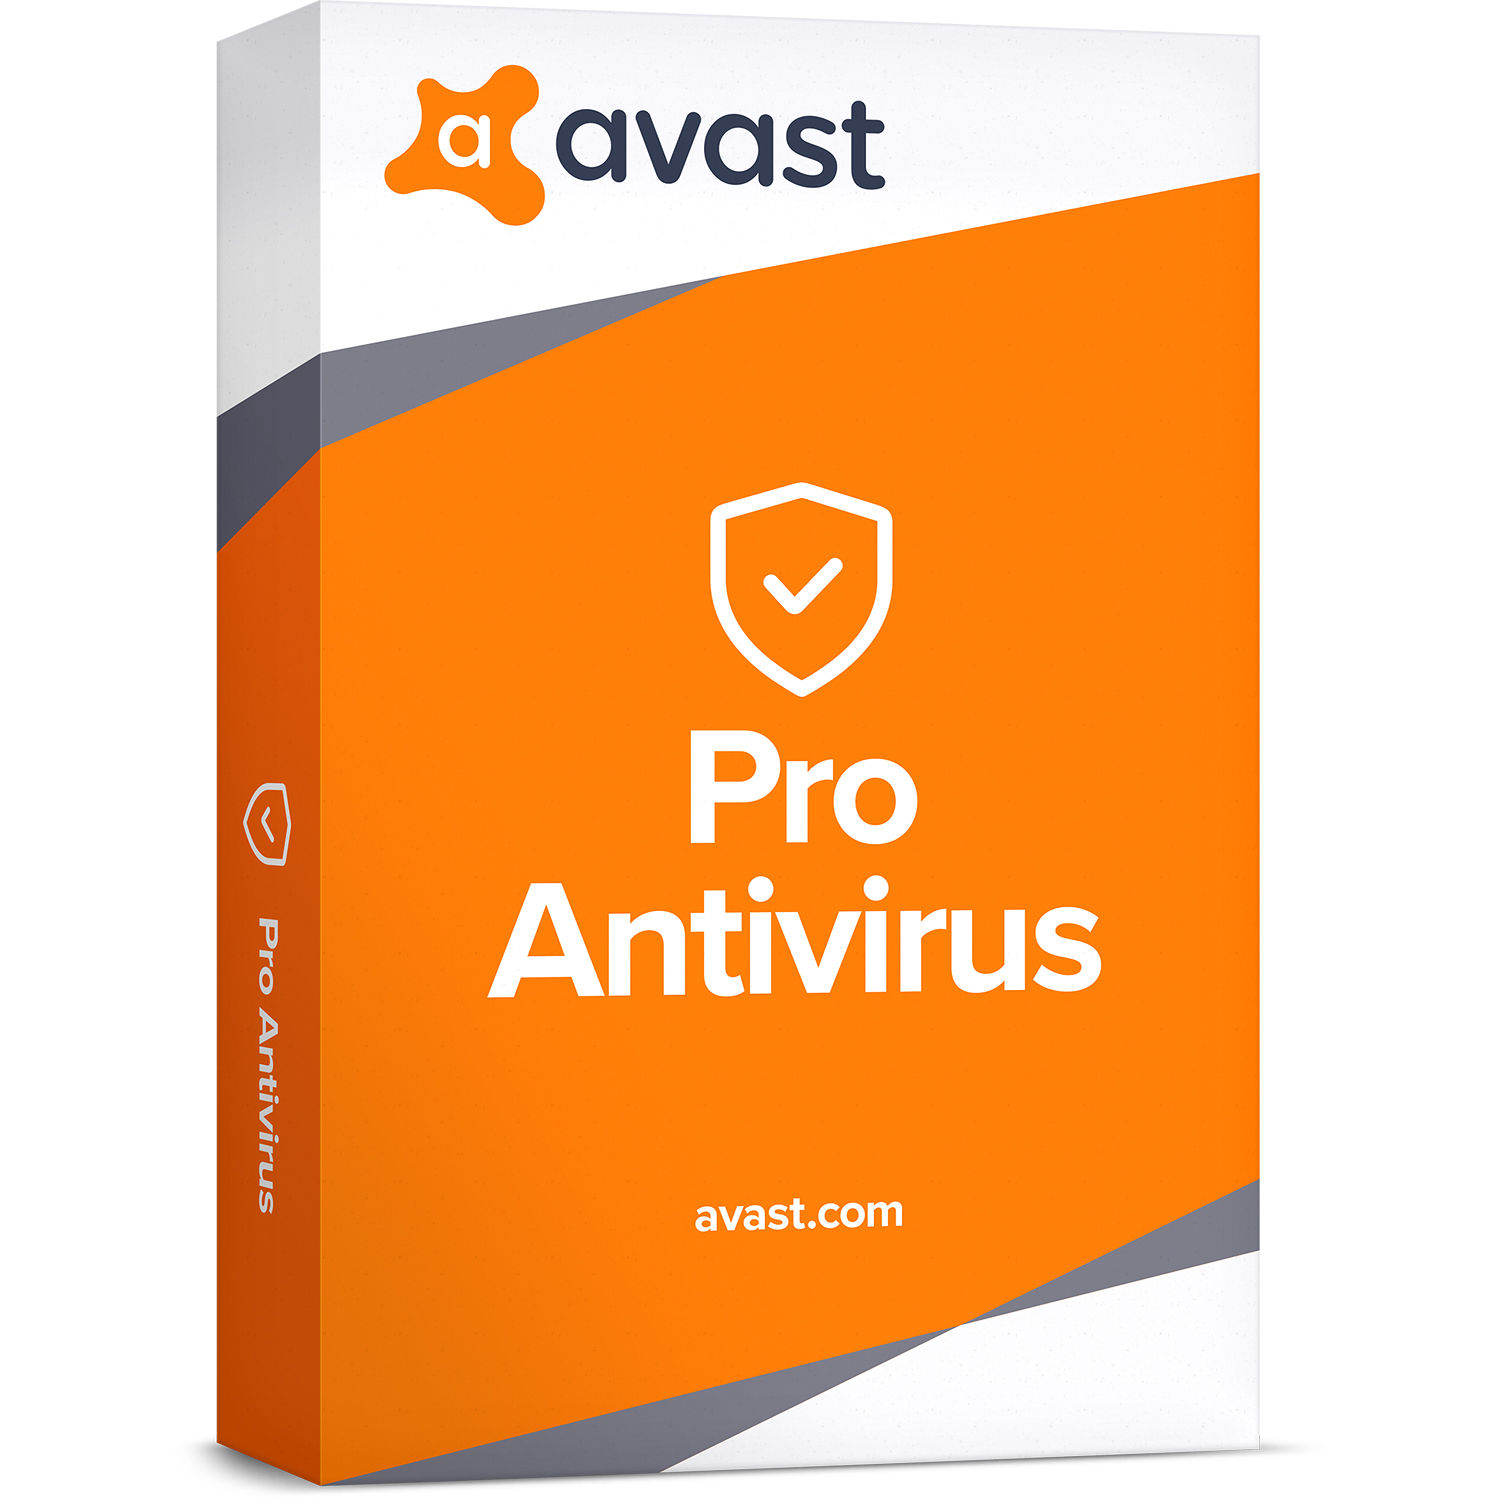 avast pro antivirus avast software 19.8.2393